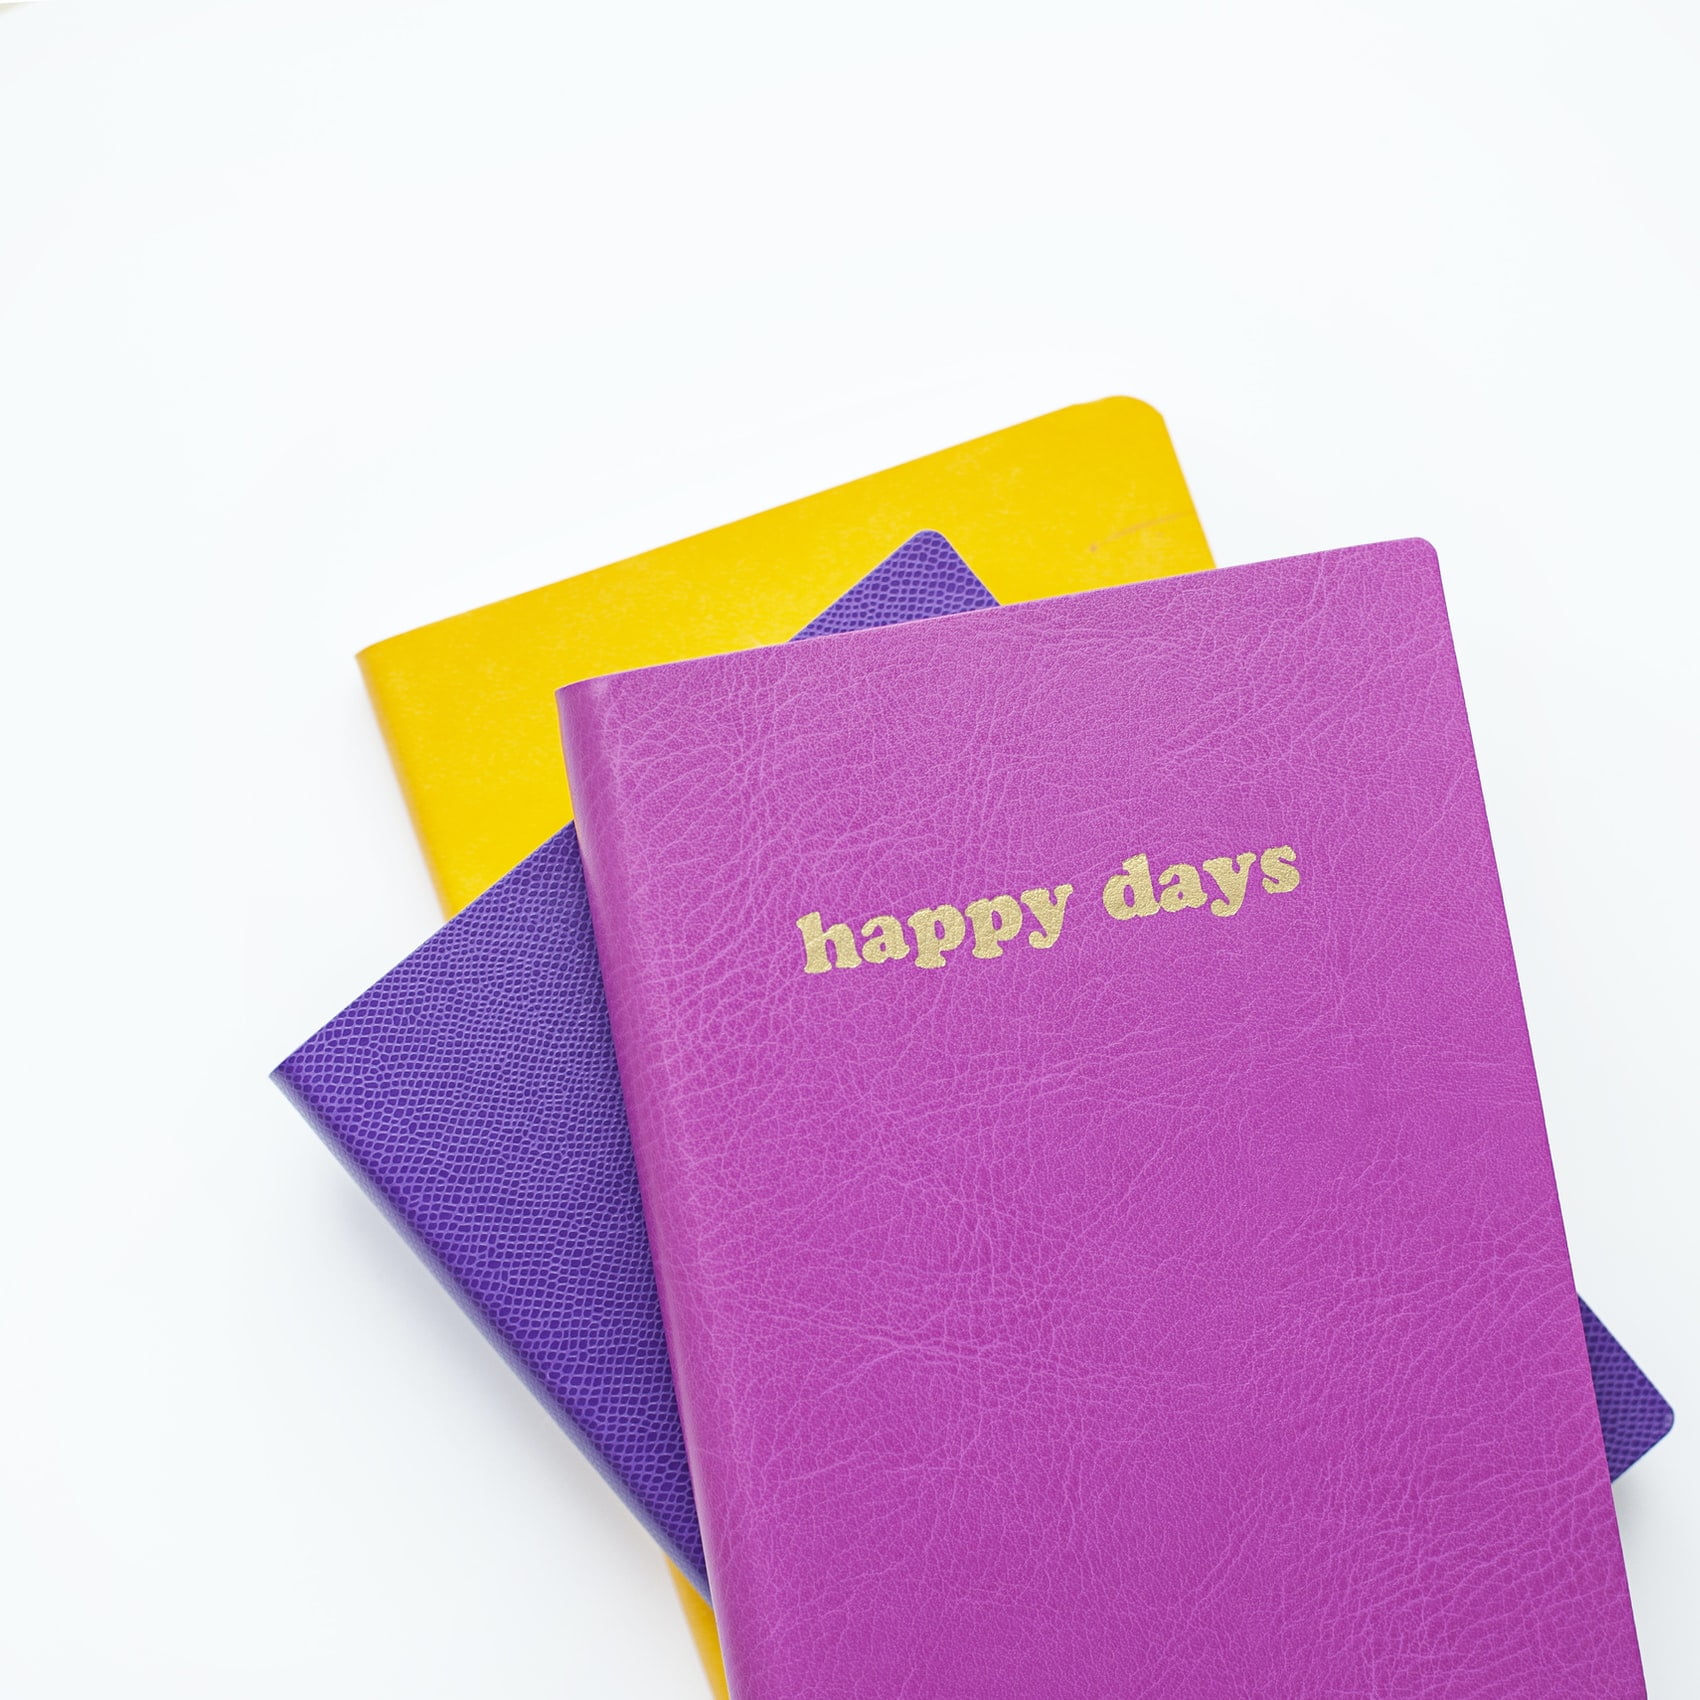 Can A Gratitude Journal Make You Happier?